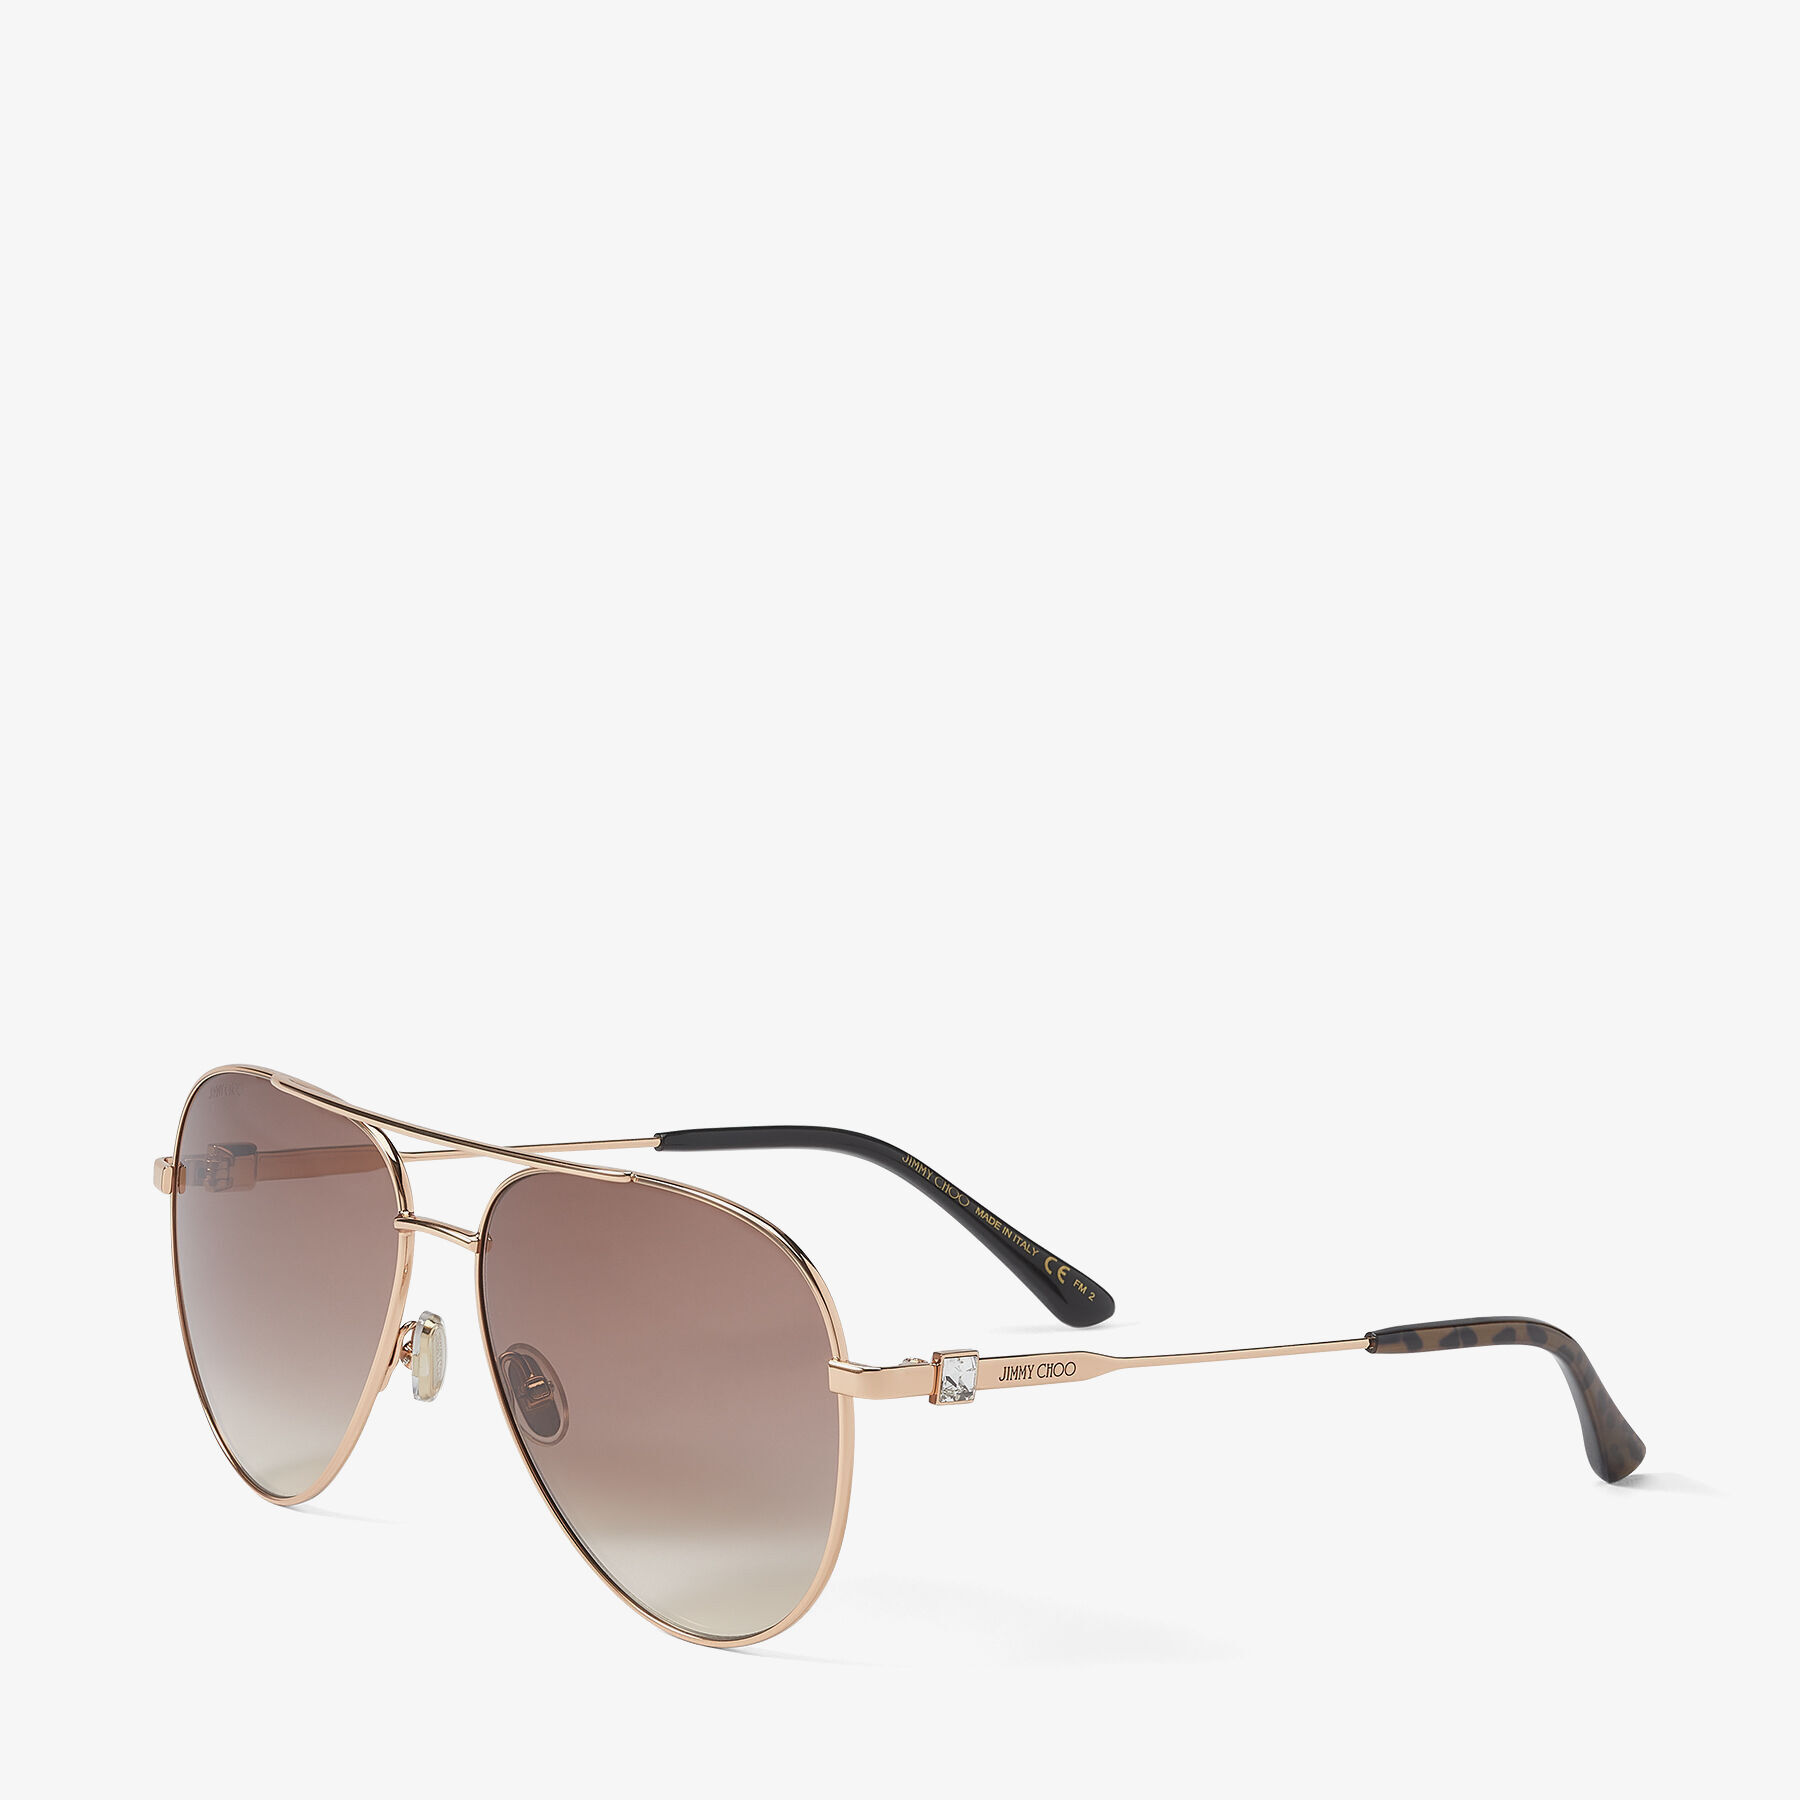 Jimmy Choo EDDY/S EKPQT Grey Aviator Sunglasses for Men